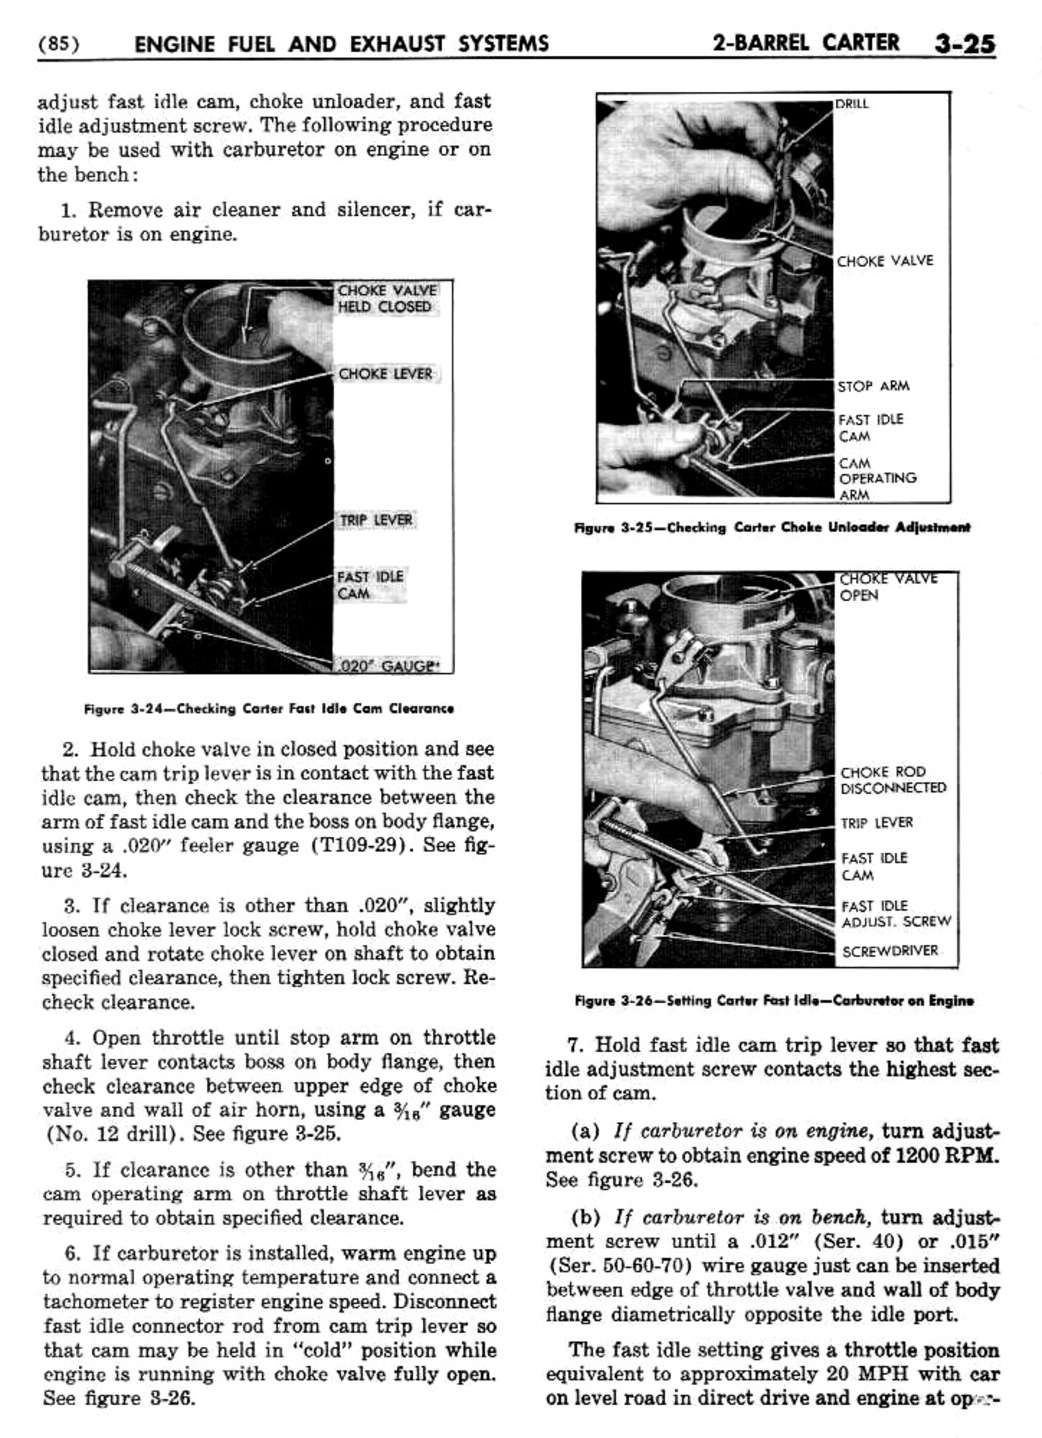 n_04 1955 Buick Shop Manual - Engine Fuel & Exhaust-025-025.jpg